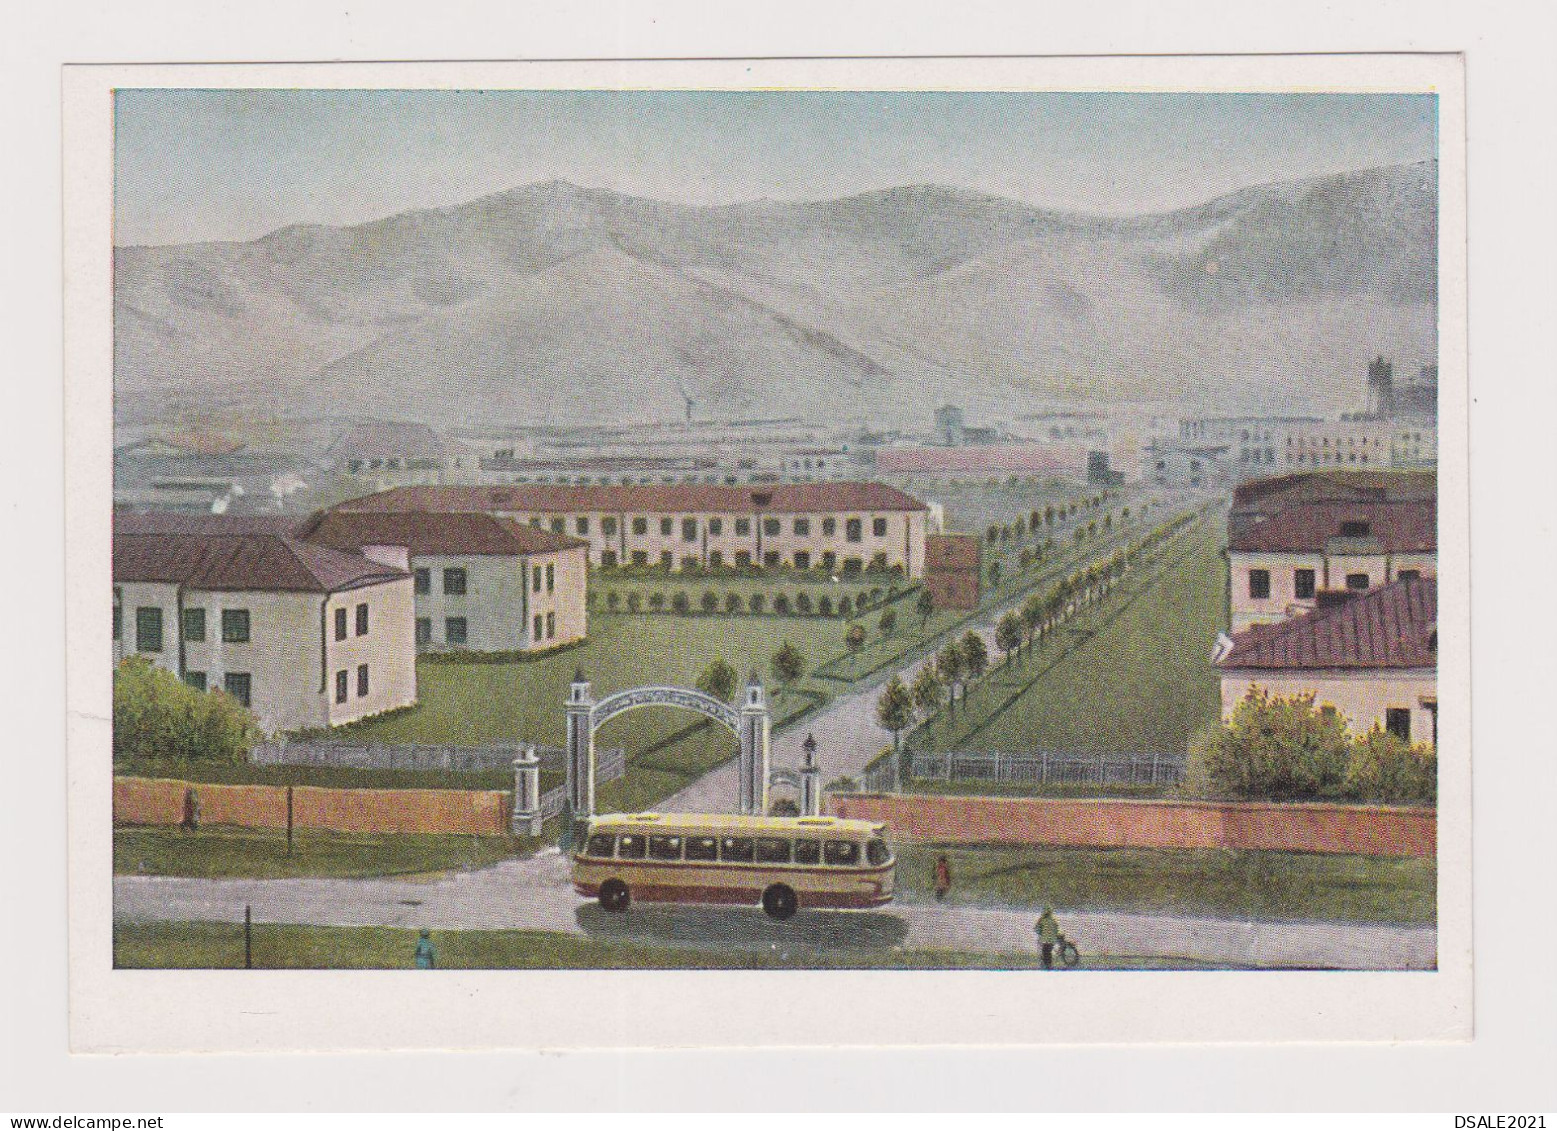 Mongolia Mongolei Mongolie Ulaanbaatar Industrial General Enterprise Vintage 1960s Soviet USSR Photo Postcard (66635) - Mongolie